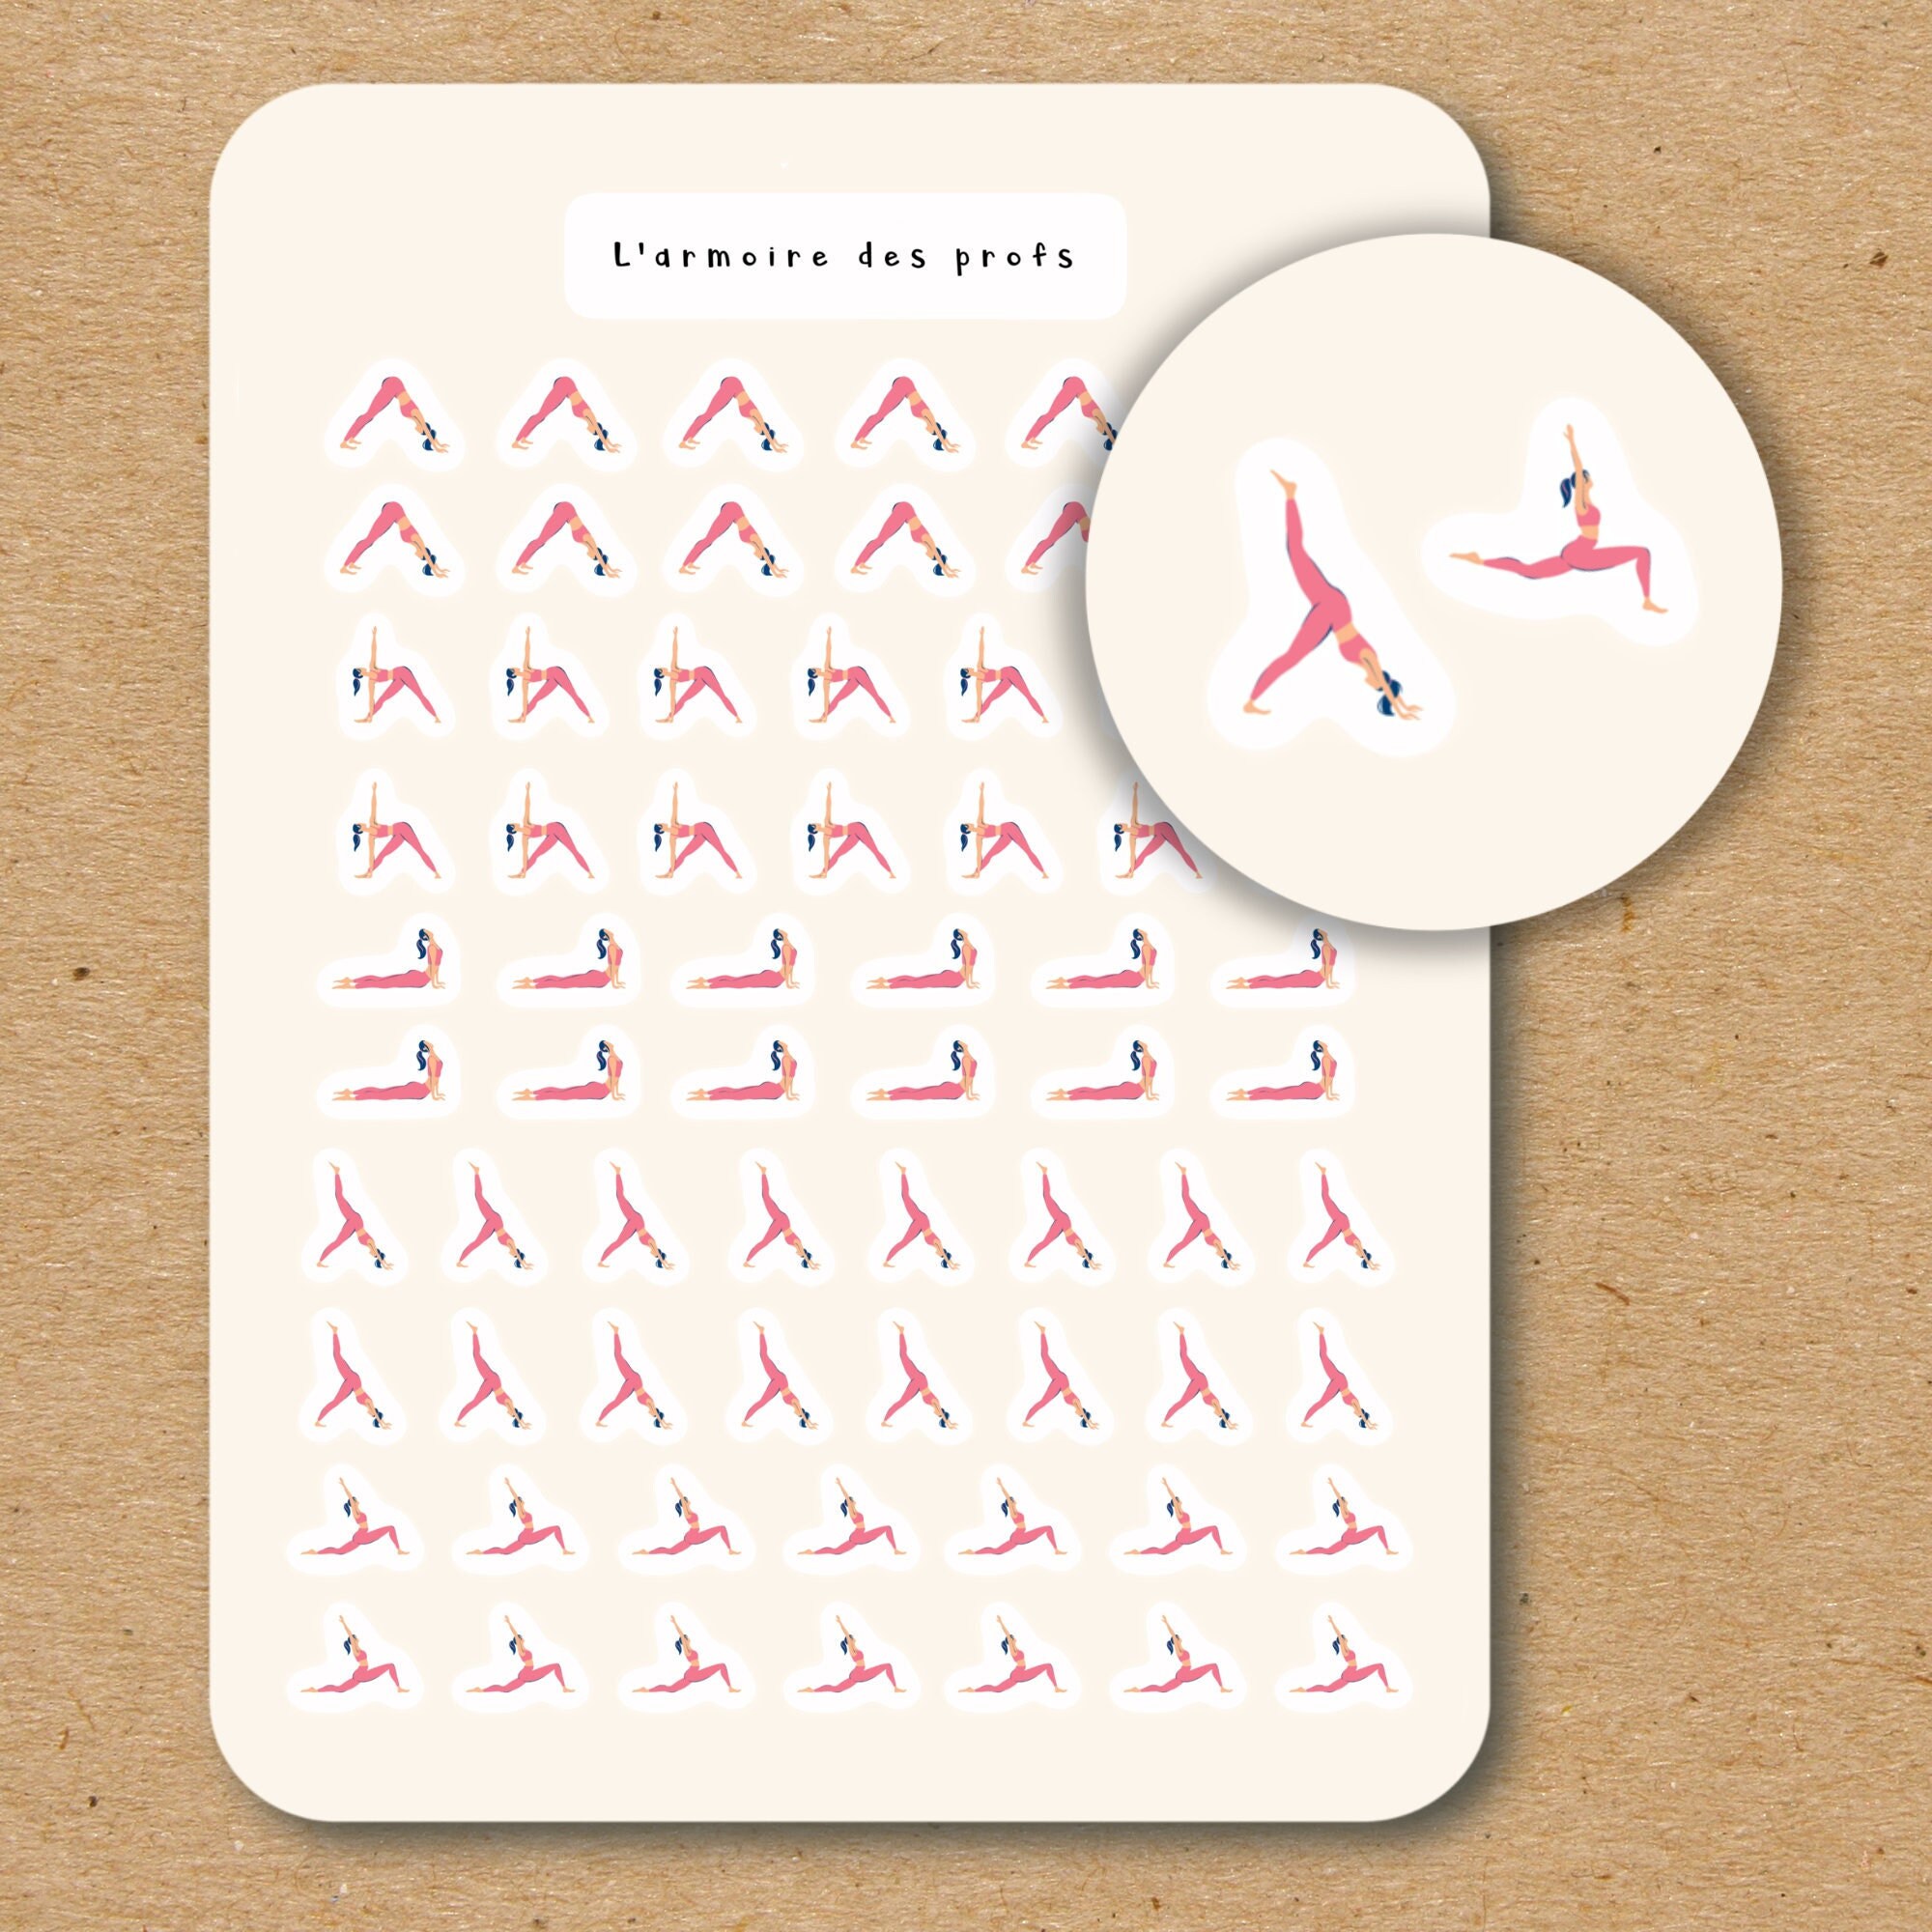 Yoga Phrases & Icons Sticker Sheet - 4x6, Set of 11 Inspirational Yoga-themed